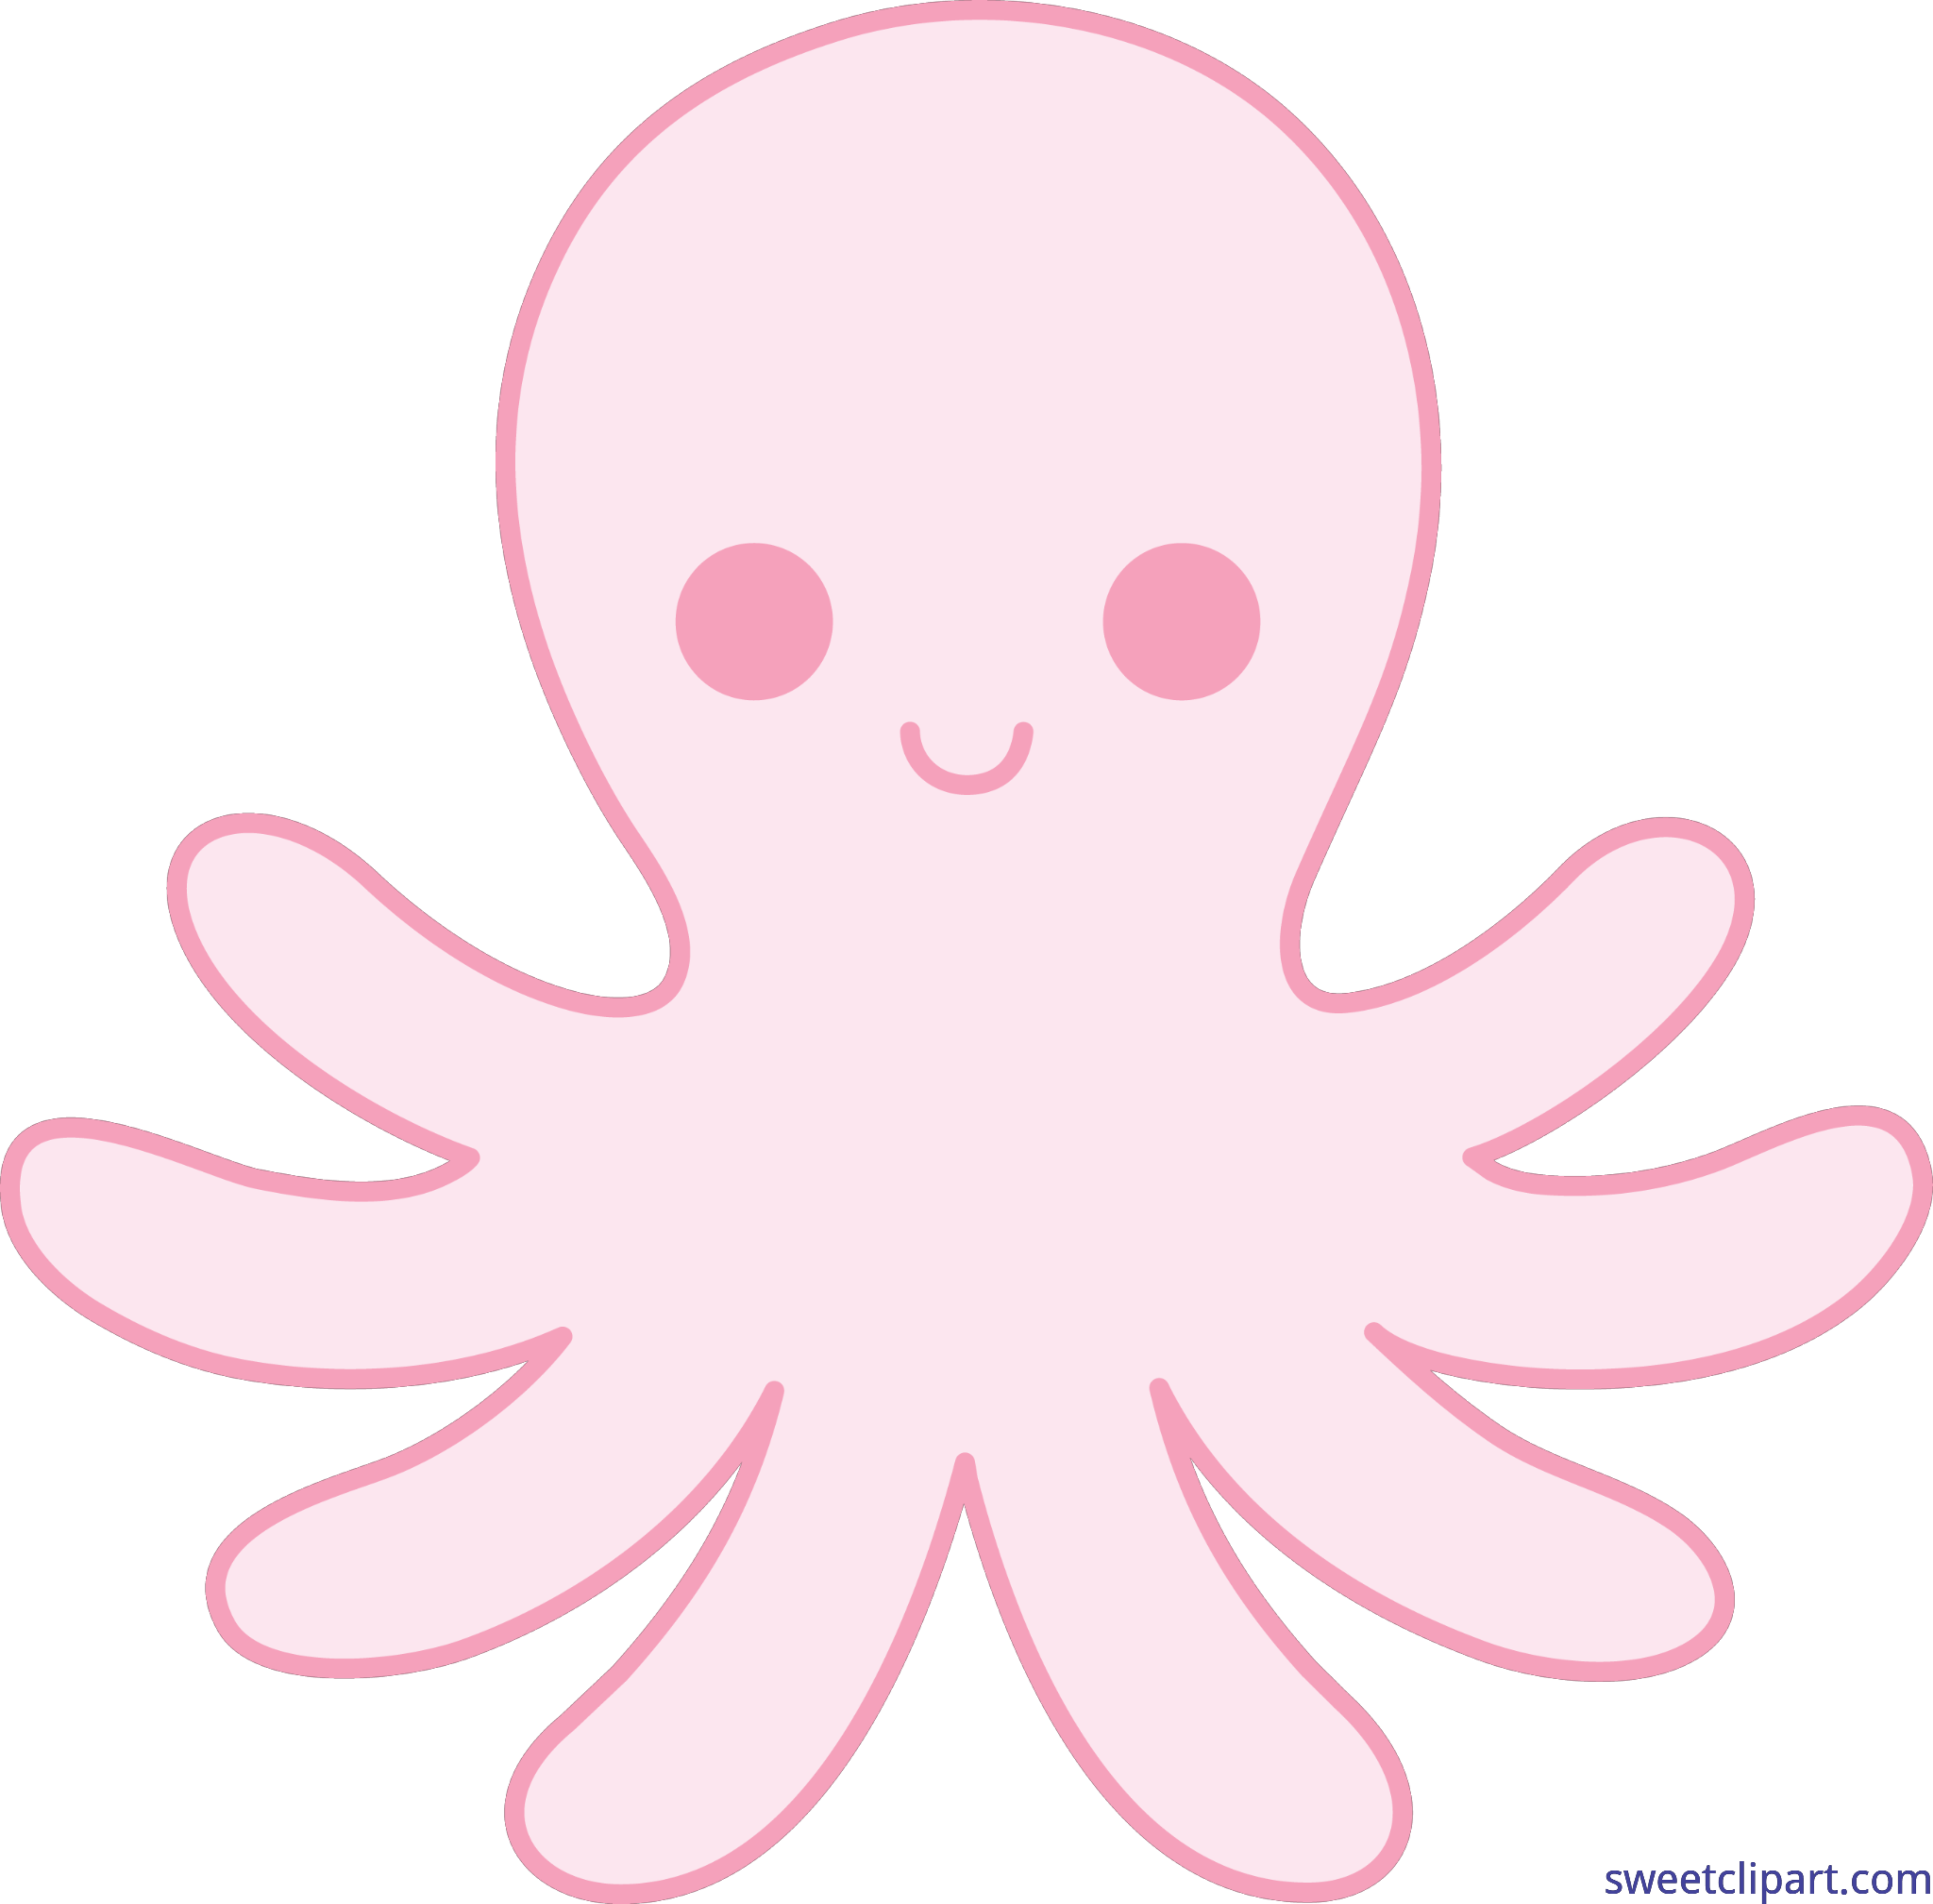 Cute pink clip art. Foods clipart octopus